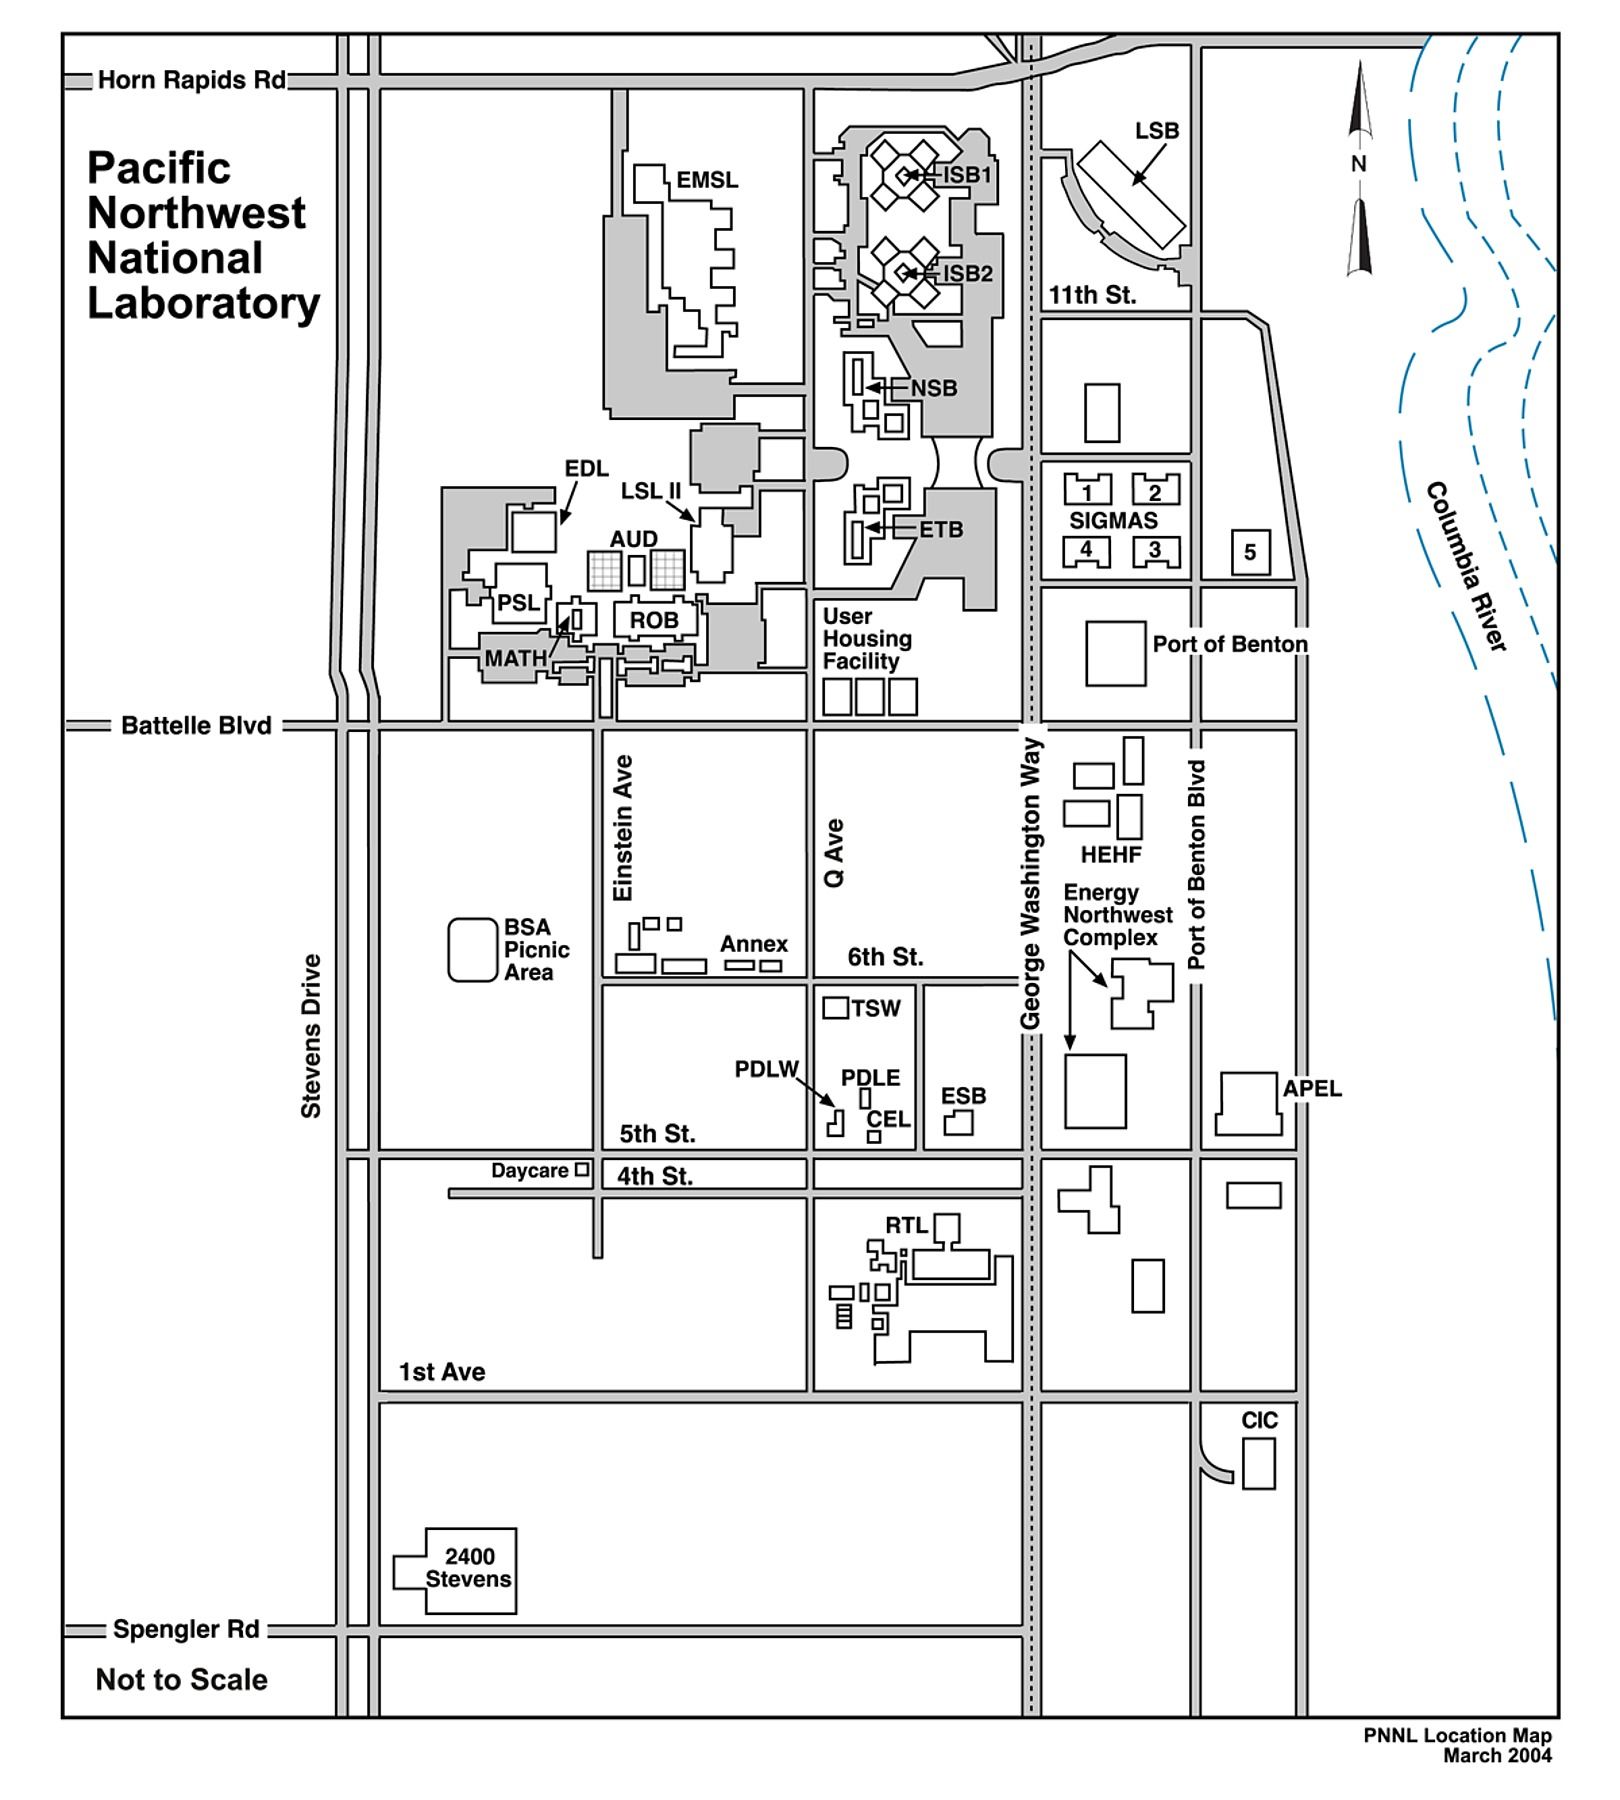 Pacific Northwest National Lab (PNNL) Map
Keywords: Pacific Northwest National Lab PNNL